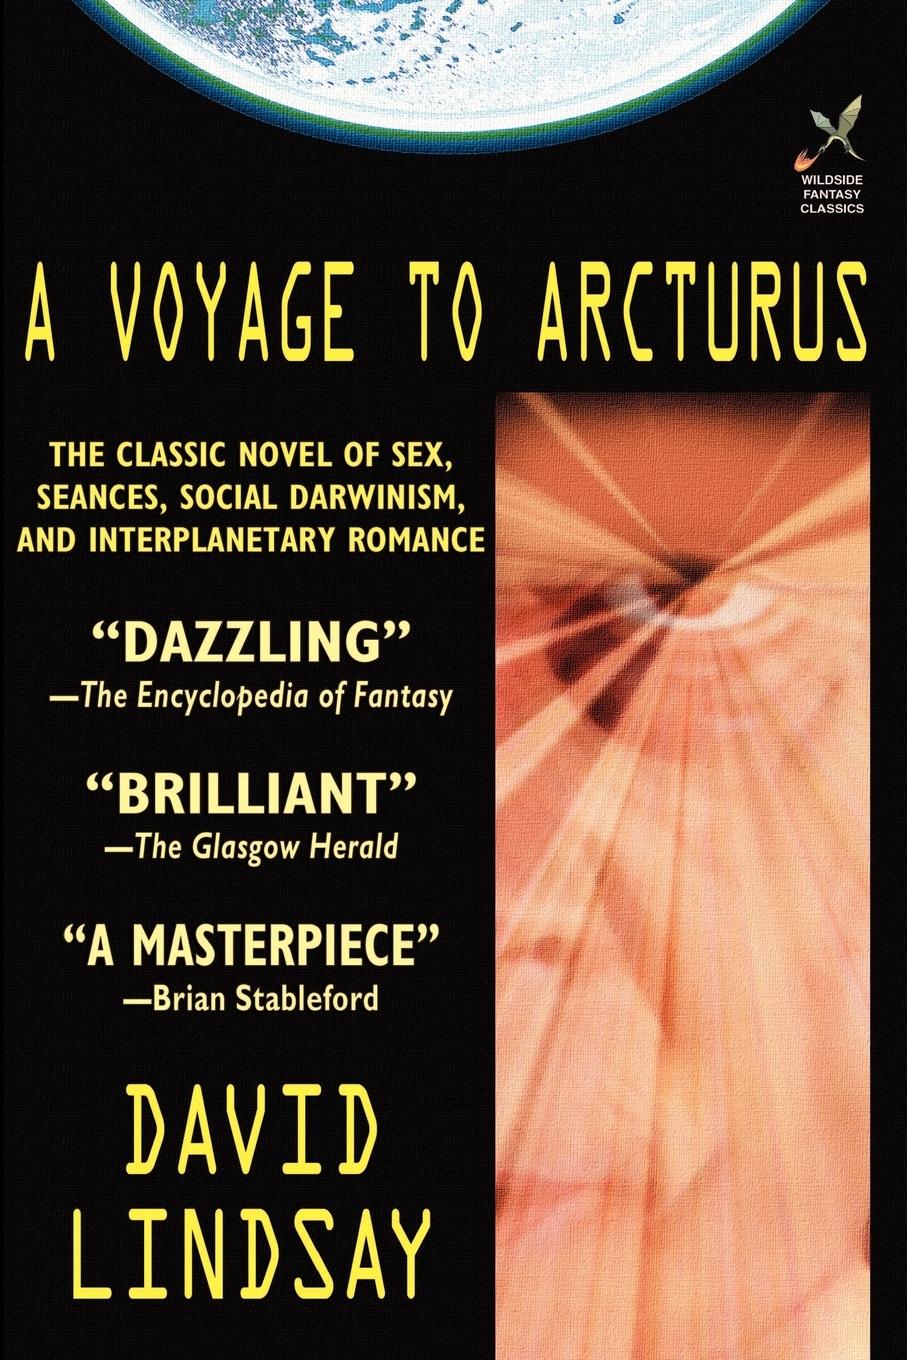 A Voyage to Arcturus - Lindsay, David